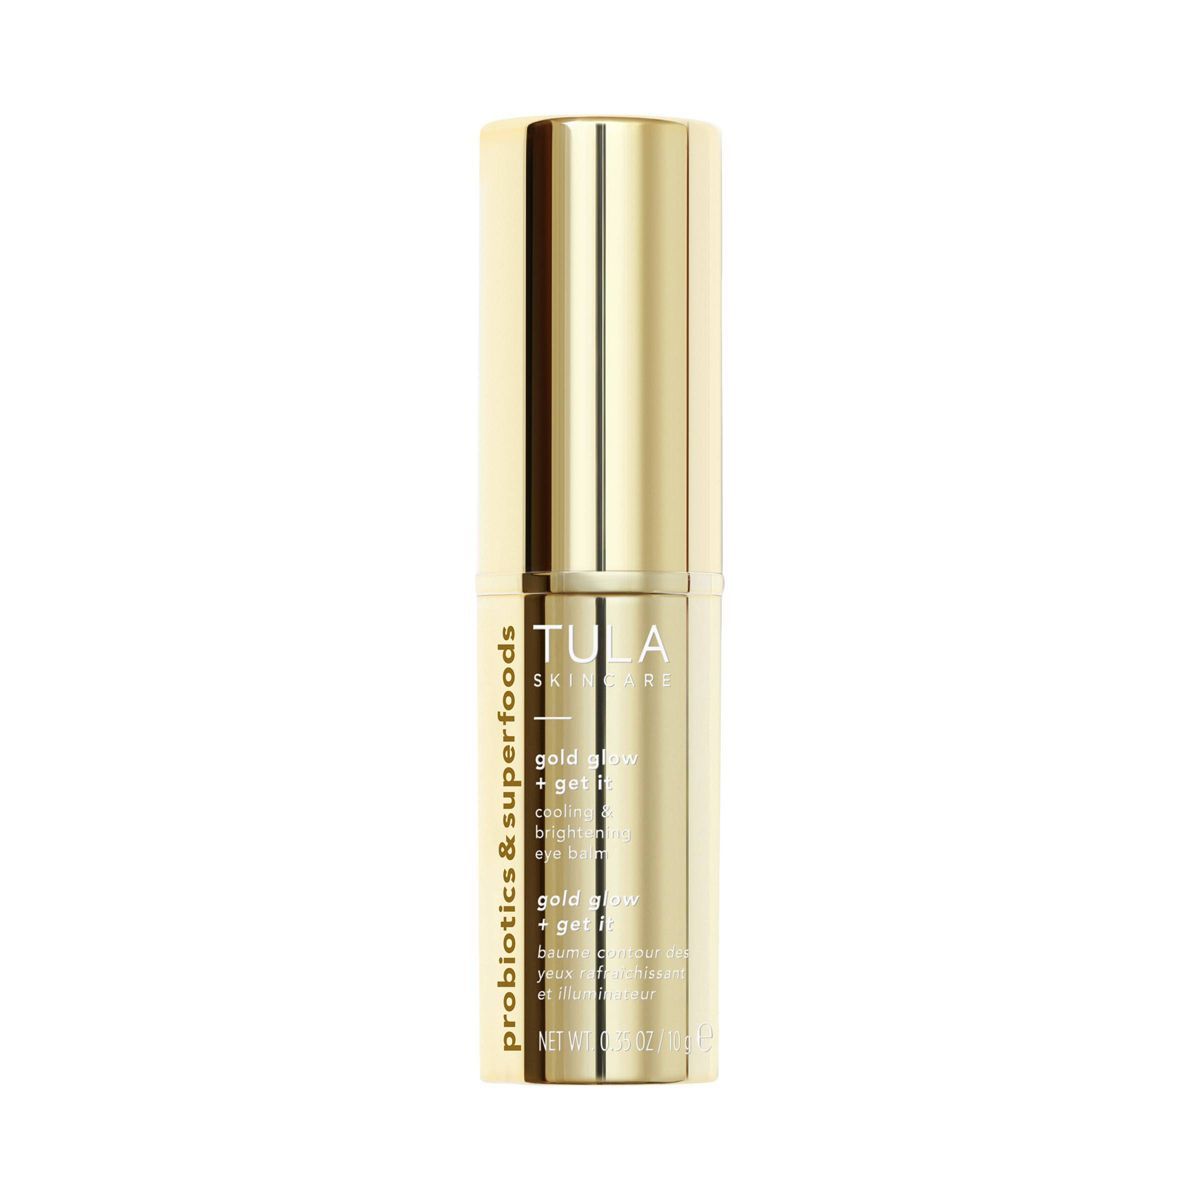 TULA SKINCARE Gold Glow + Get It Cooling & Brightening Eye Balm - 0.35oz - Ulta Beauty | Target